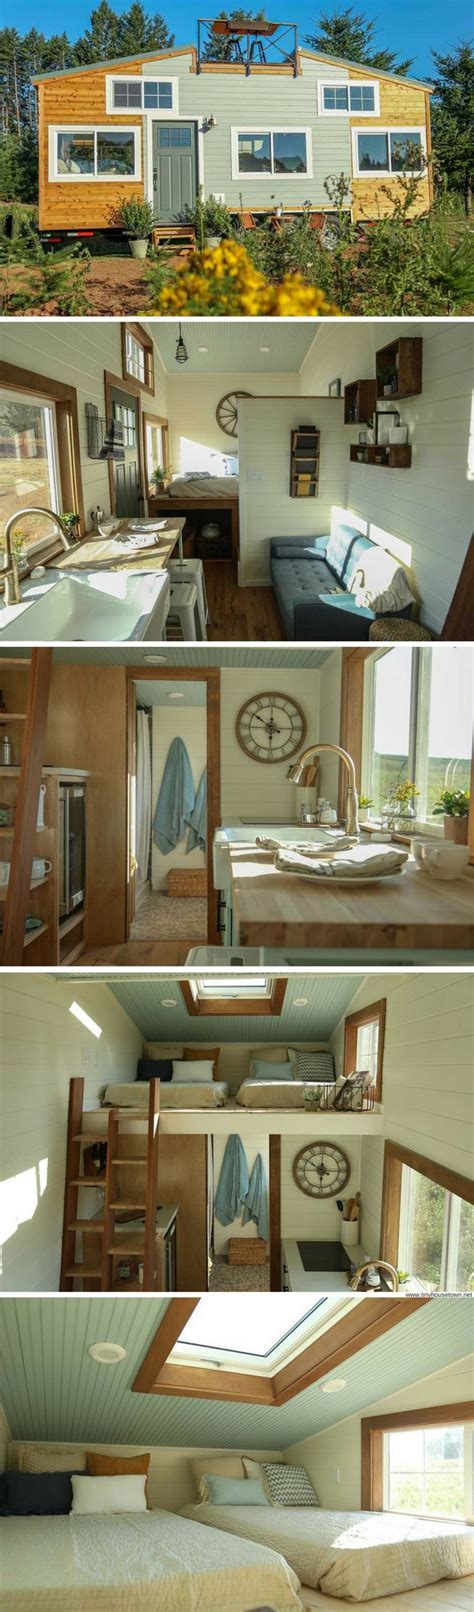 A Luxury Rustic Tiny Home By Tiny Heirloom Tiny House Cabin Tiny